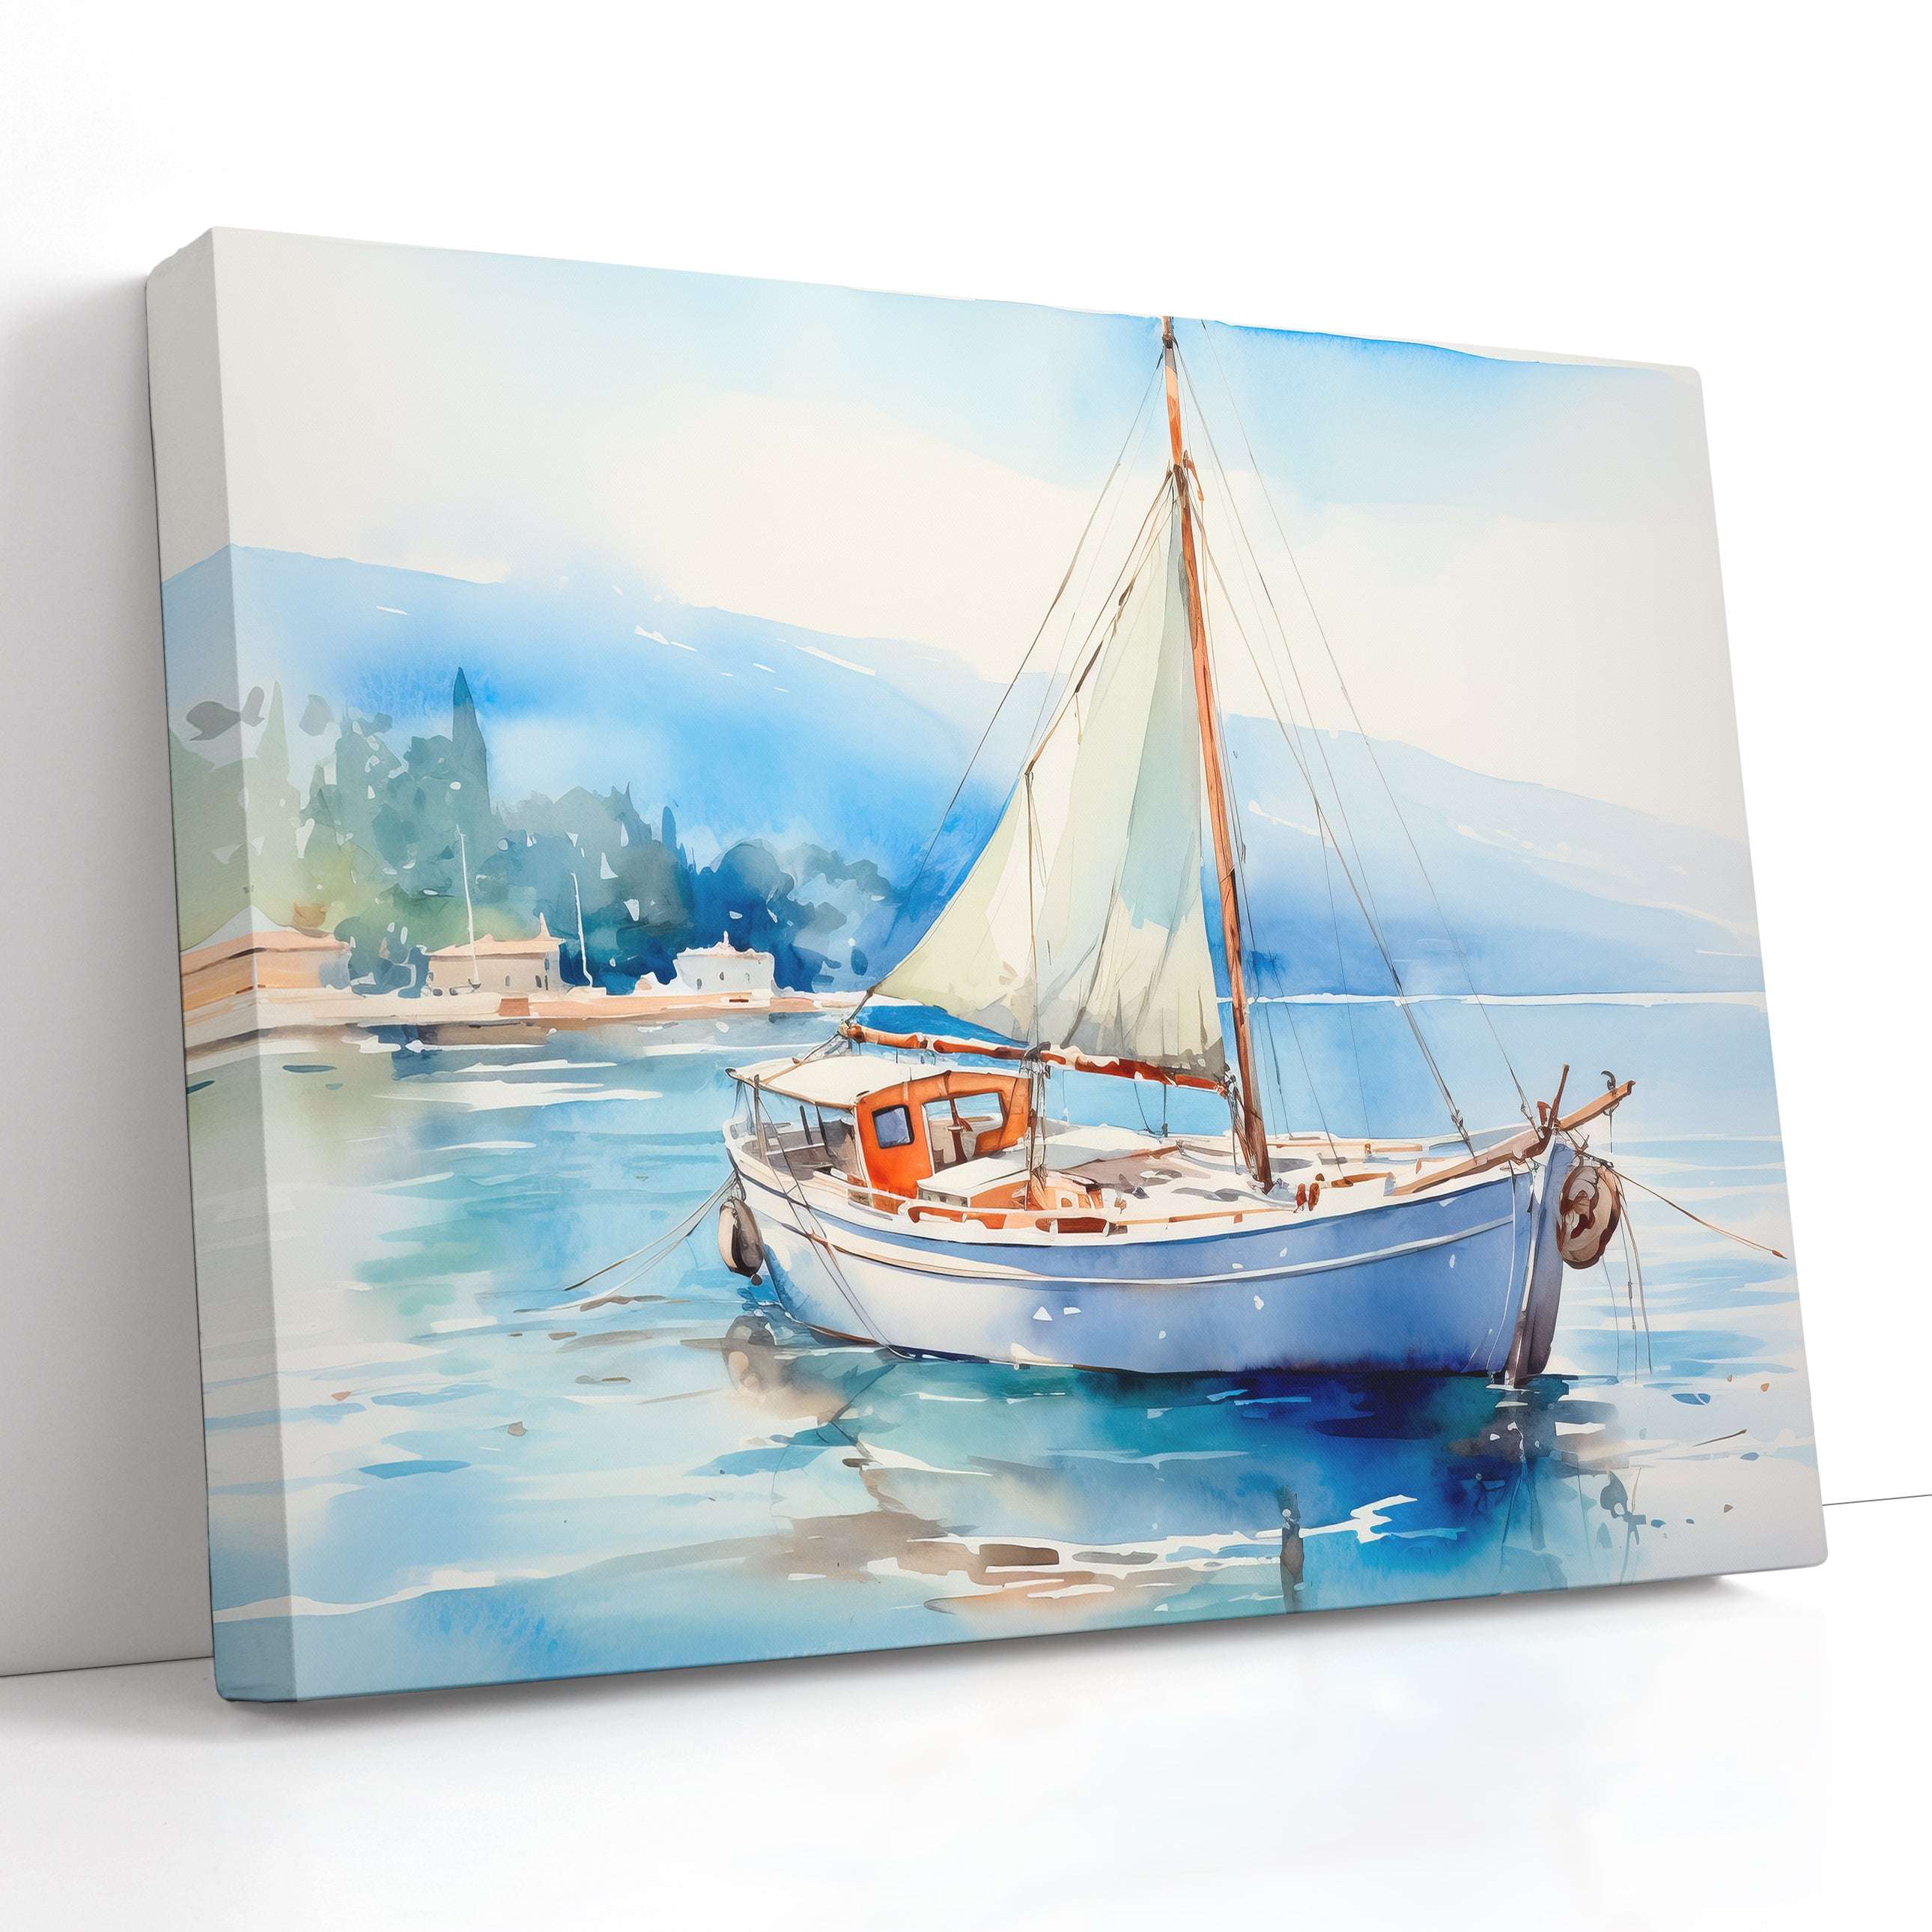 White Boat on a Calm Lake - Canvas Print - Artoholica Ready to Hang Canvas Print